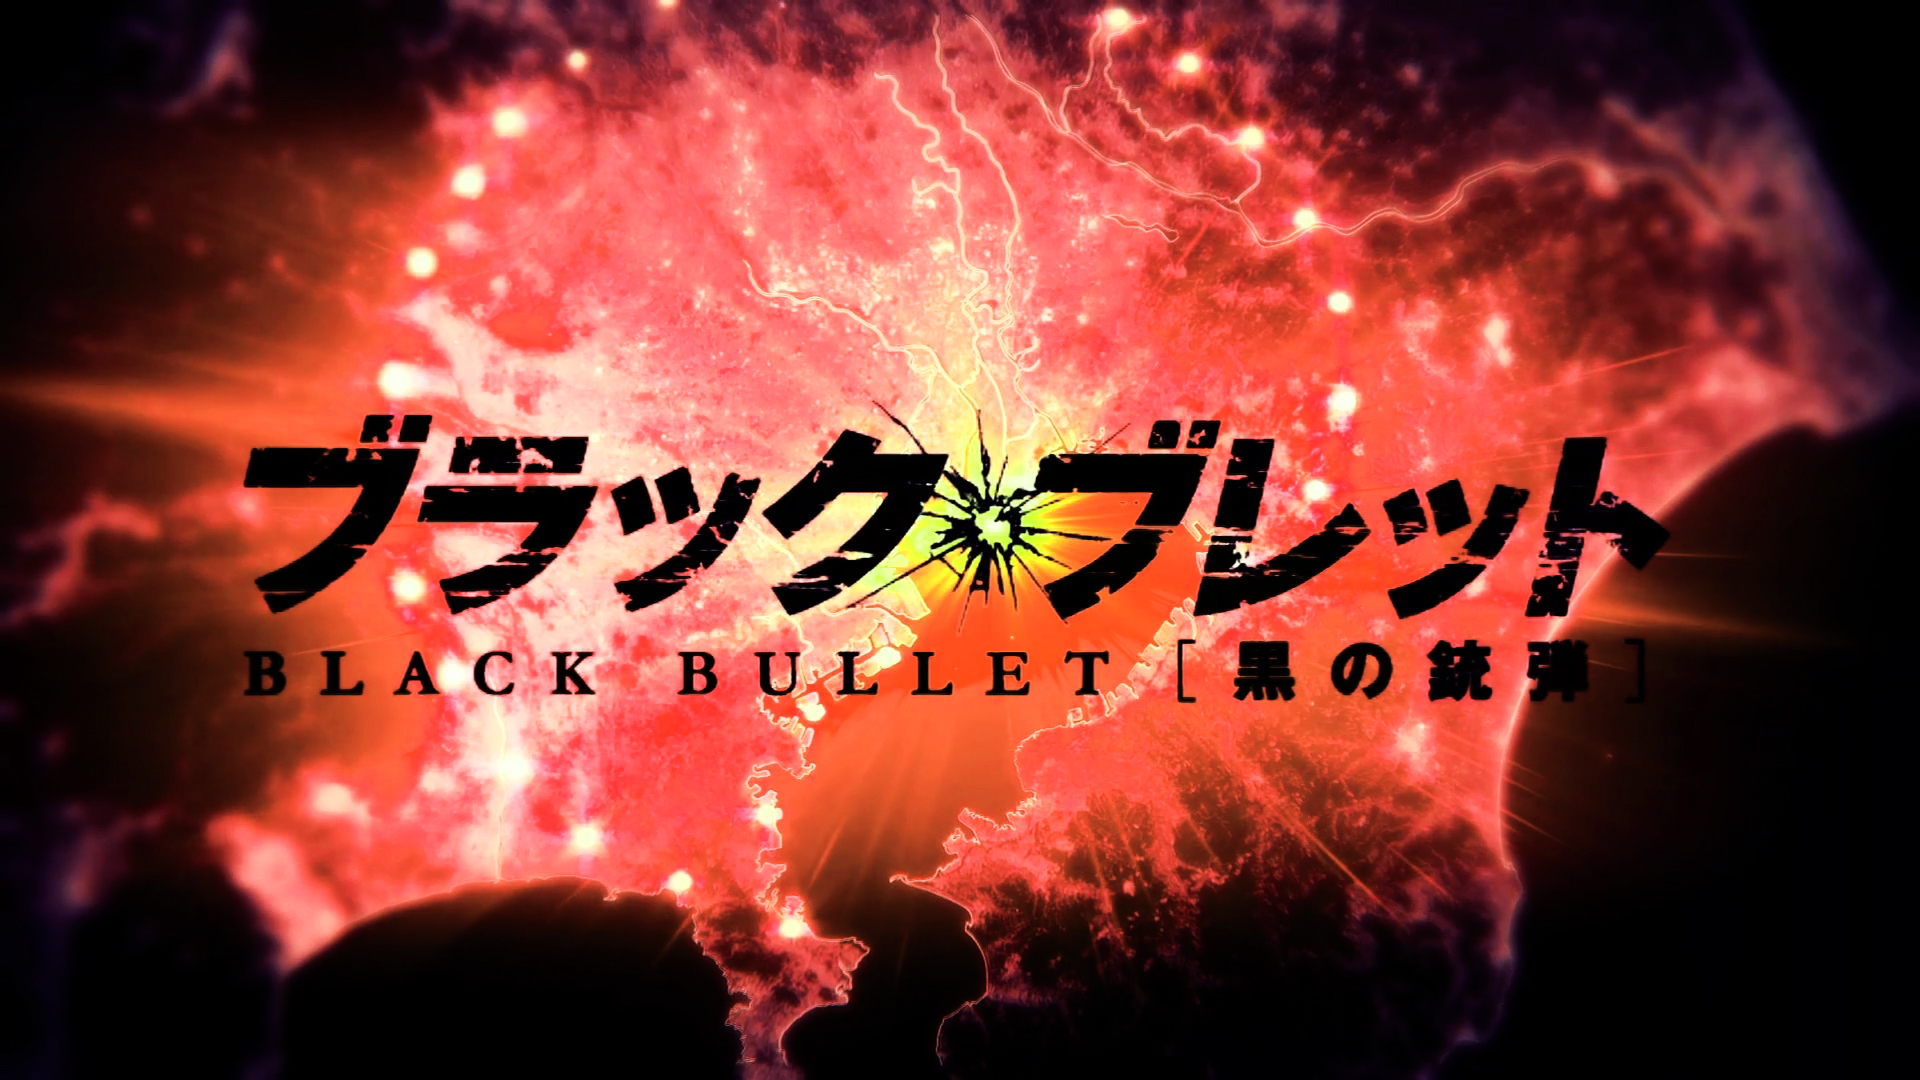 Black Bullet Background HD By Defild